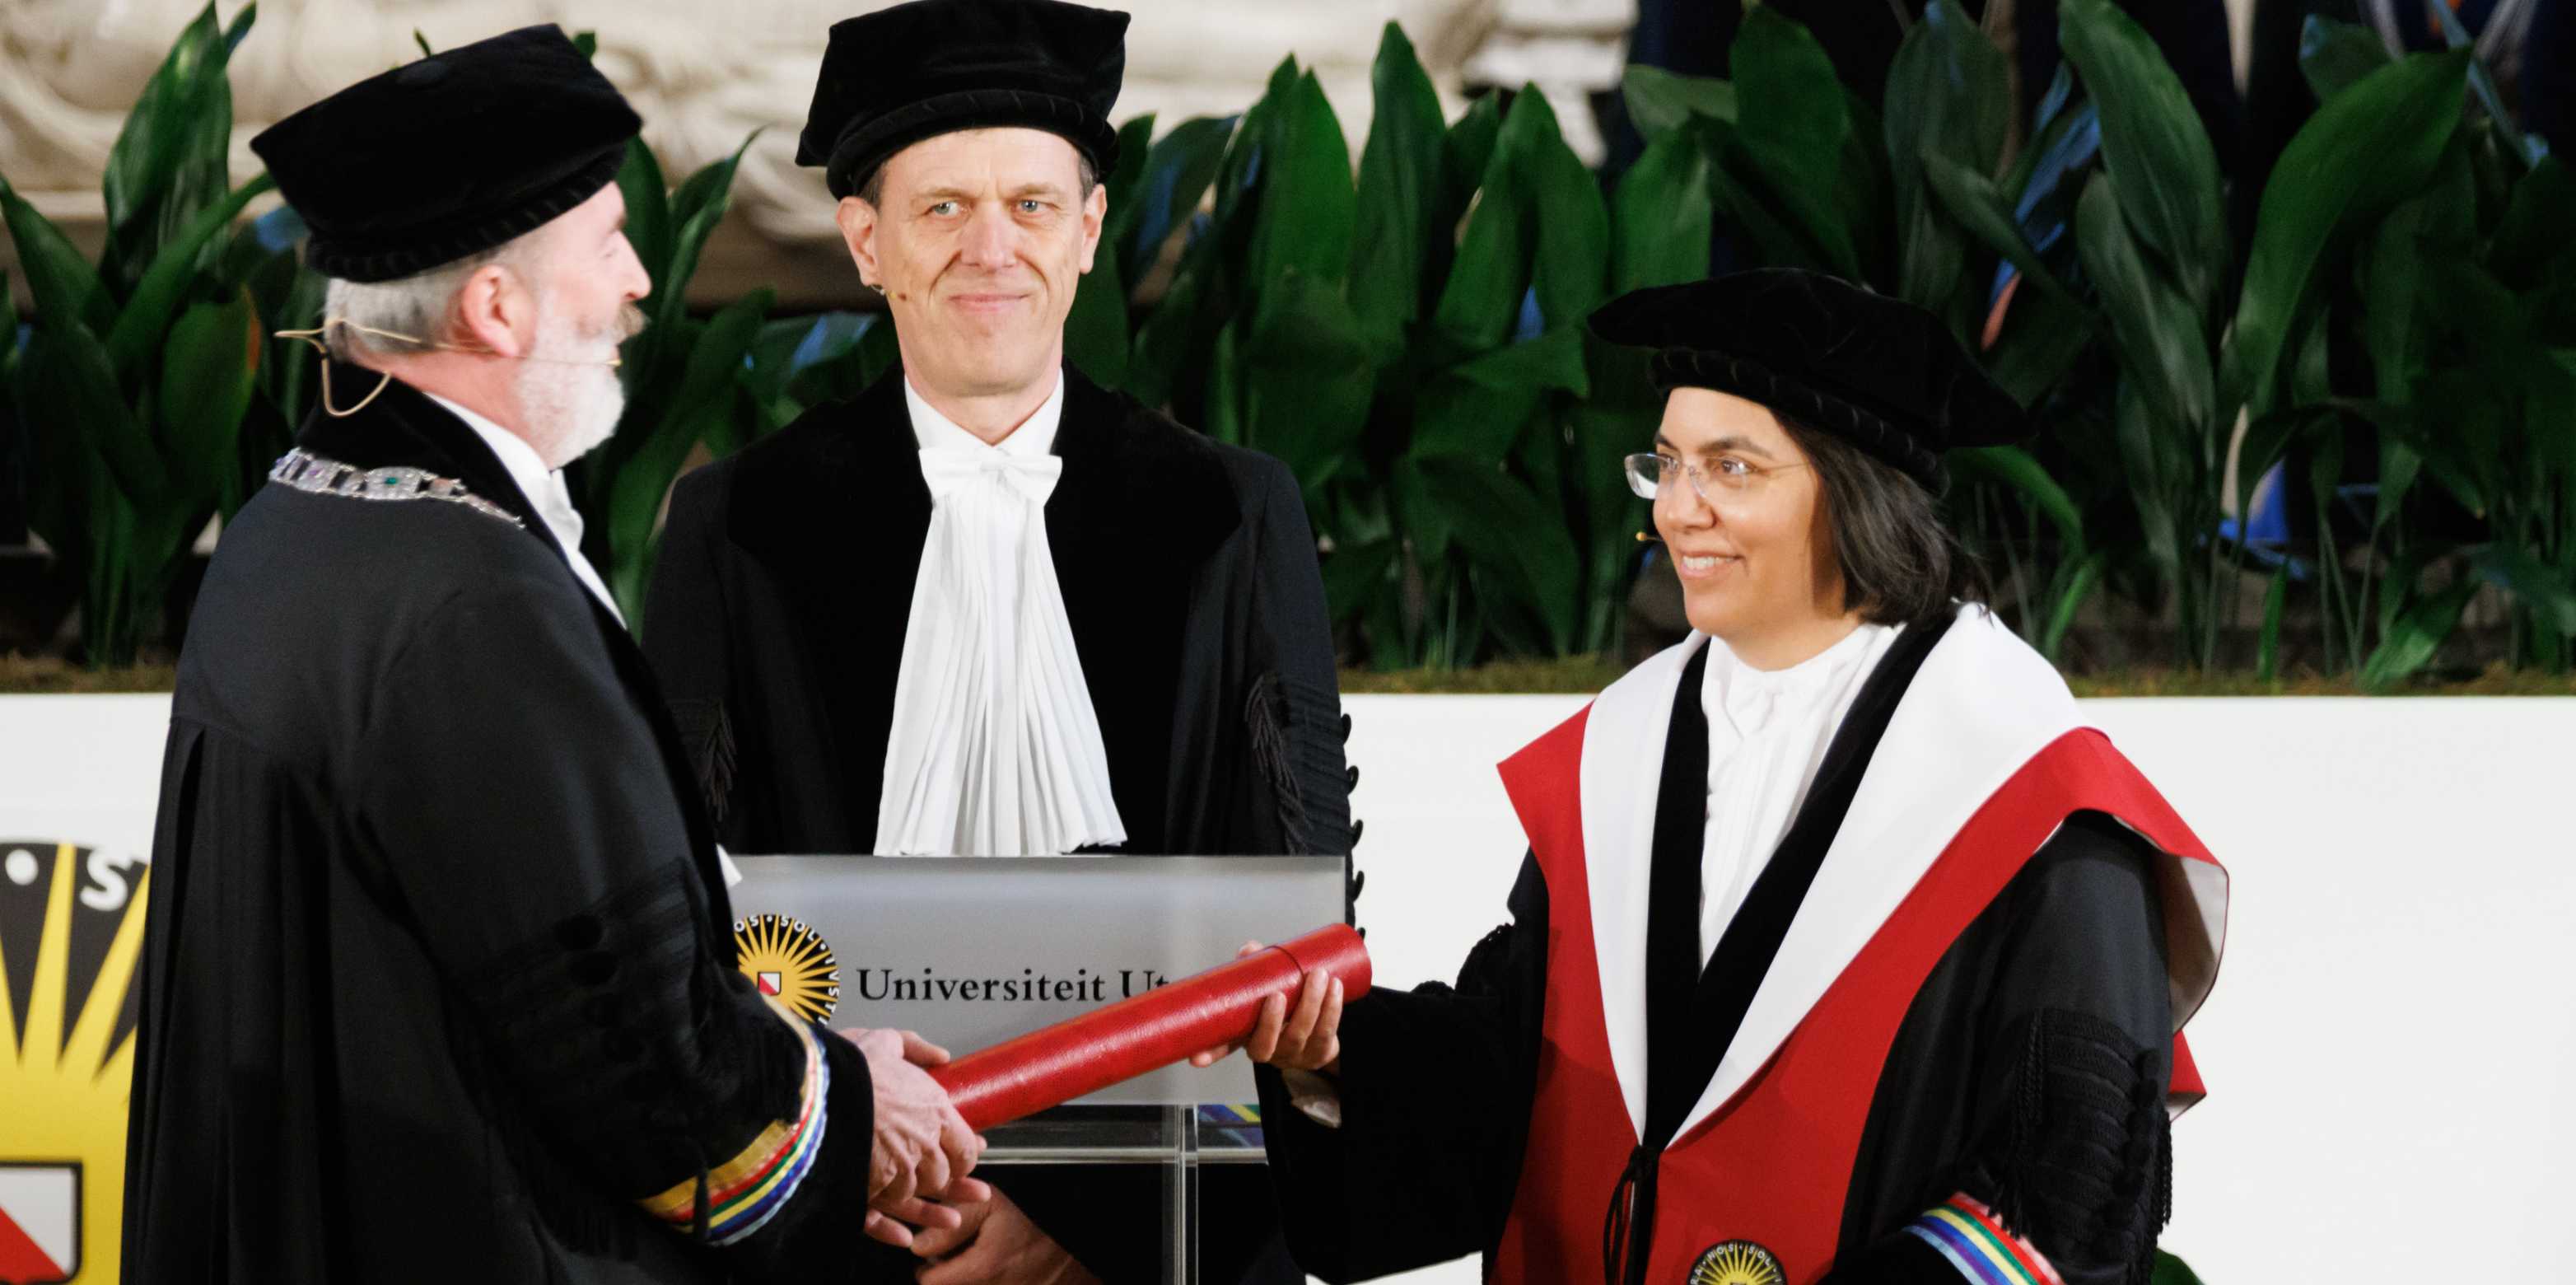 Sonia Senevirante (right) at the Dies Natalis Celebration of Utrecht University. (Photo: Utrecht University)